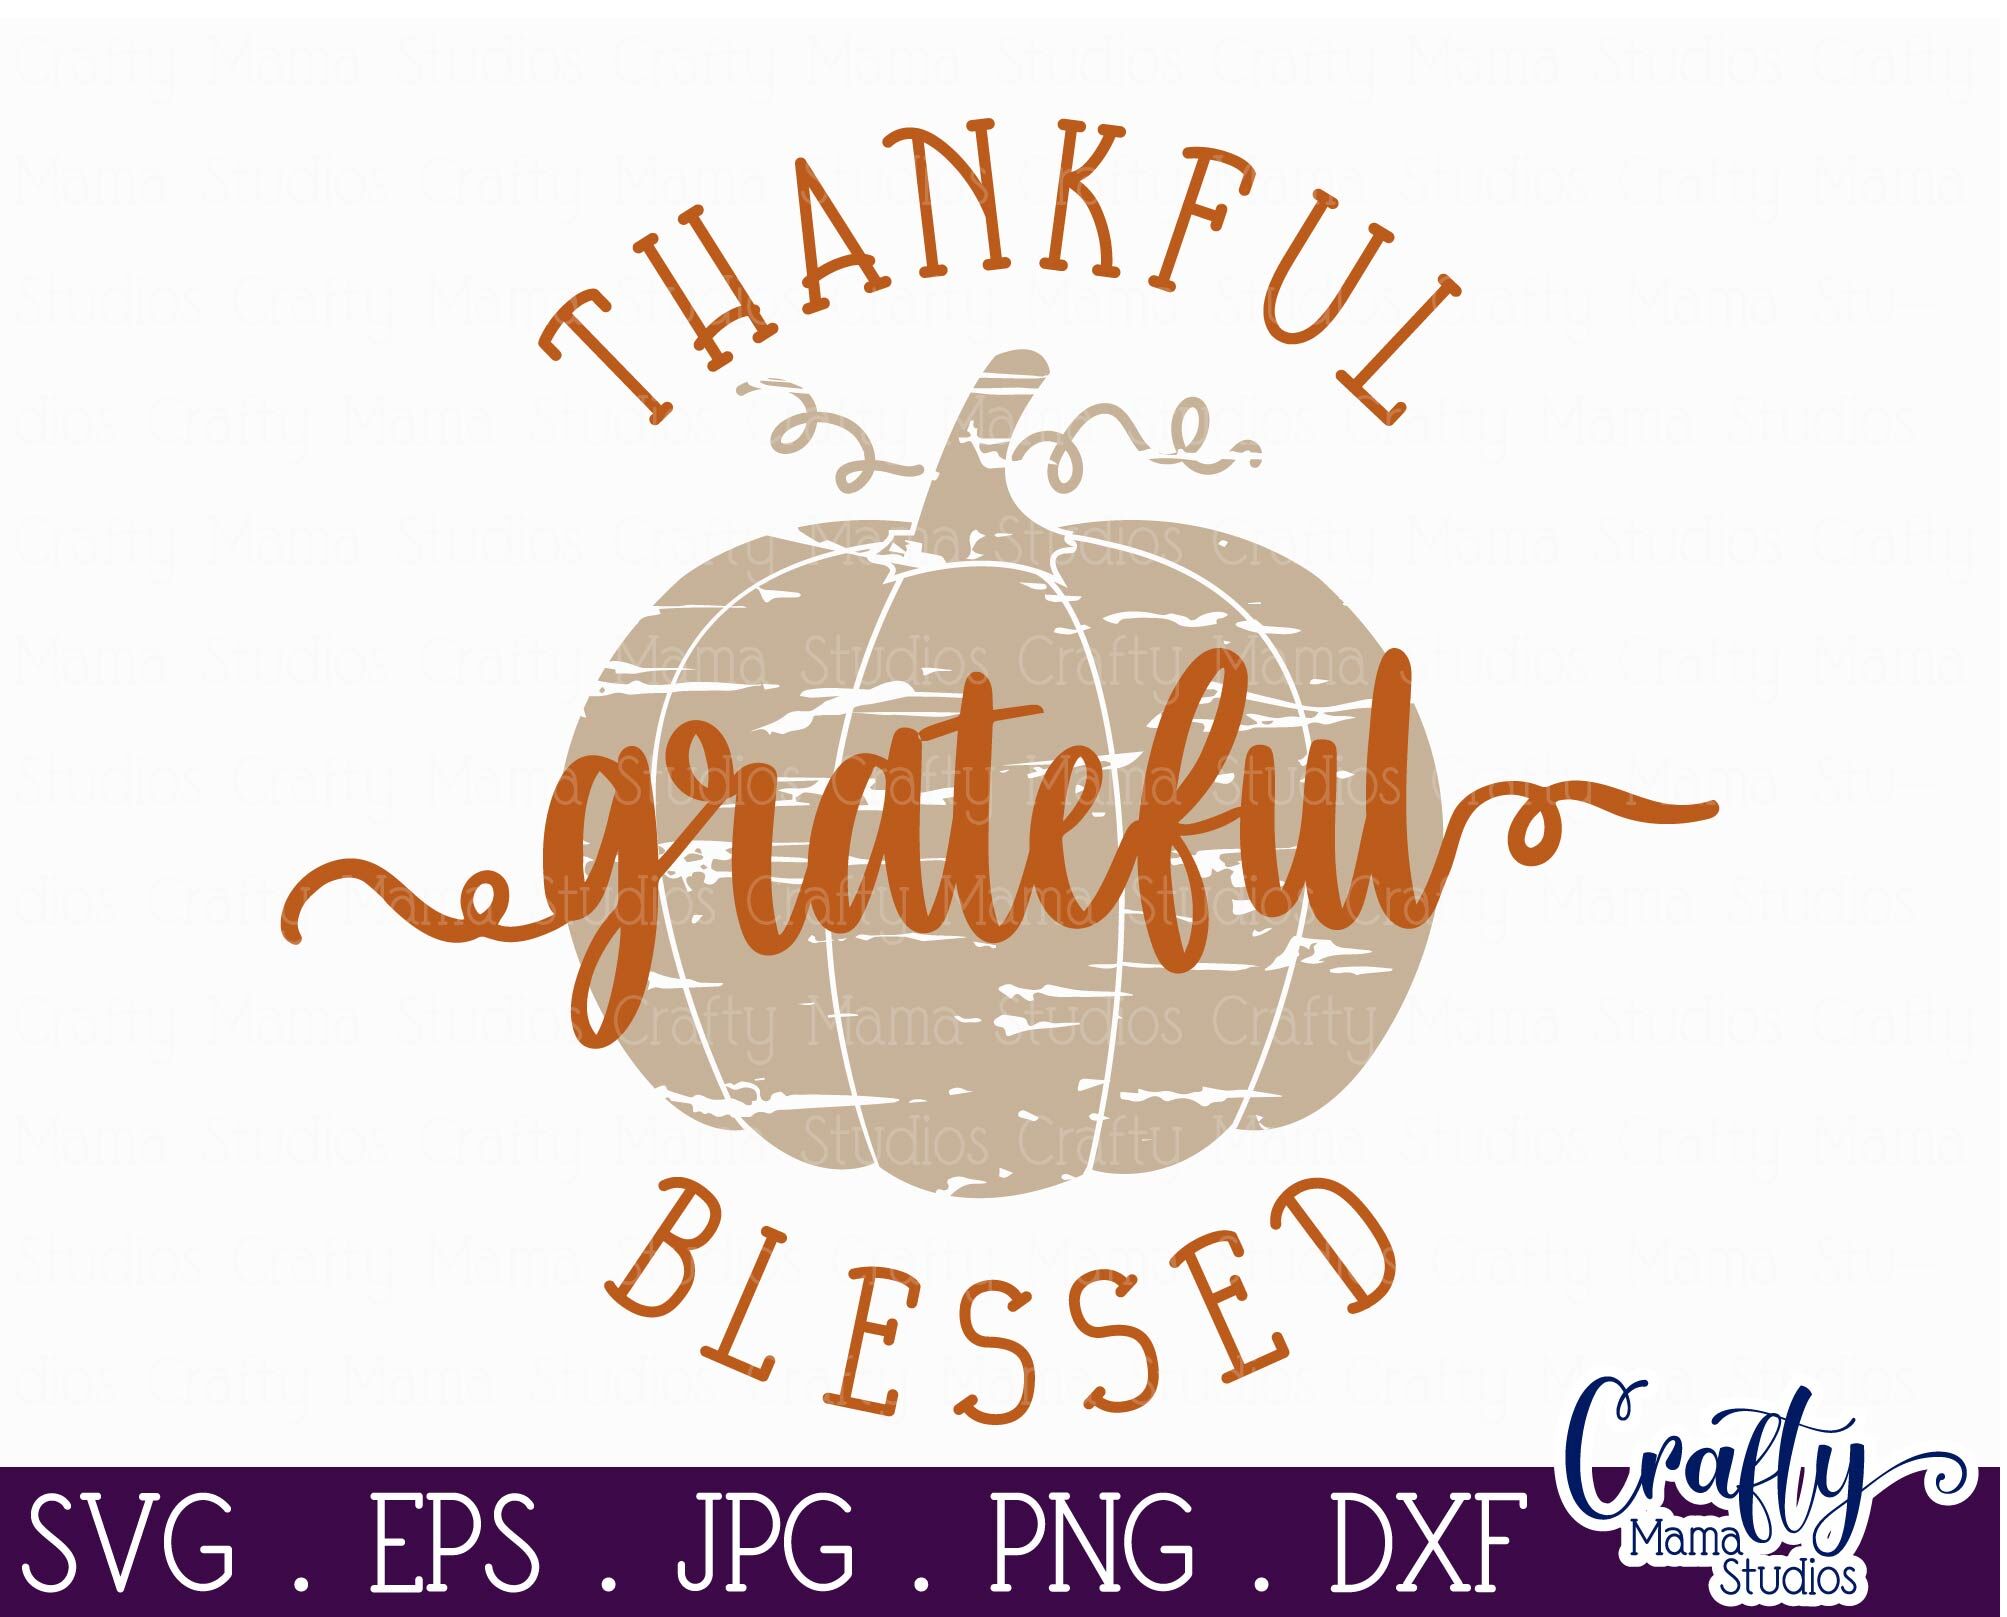 Thankful Grateful Blessed Thanksgiving SVG